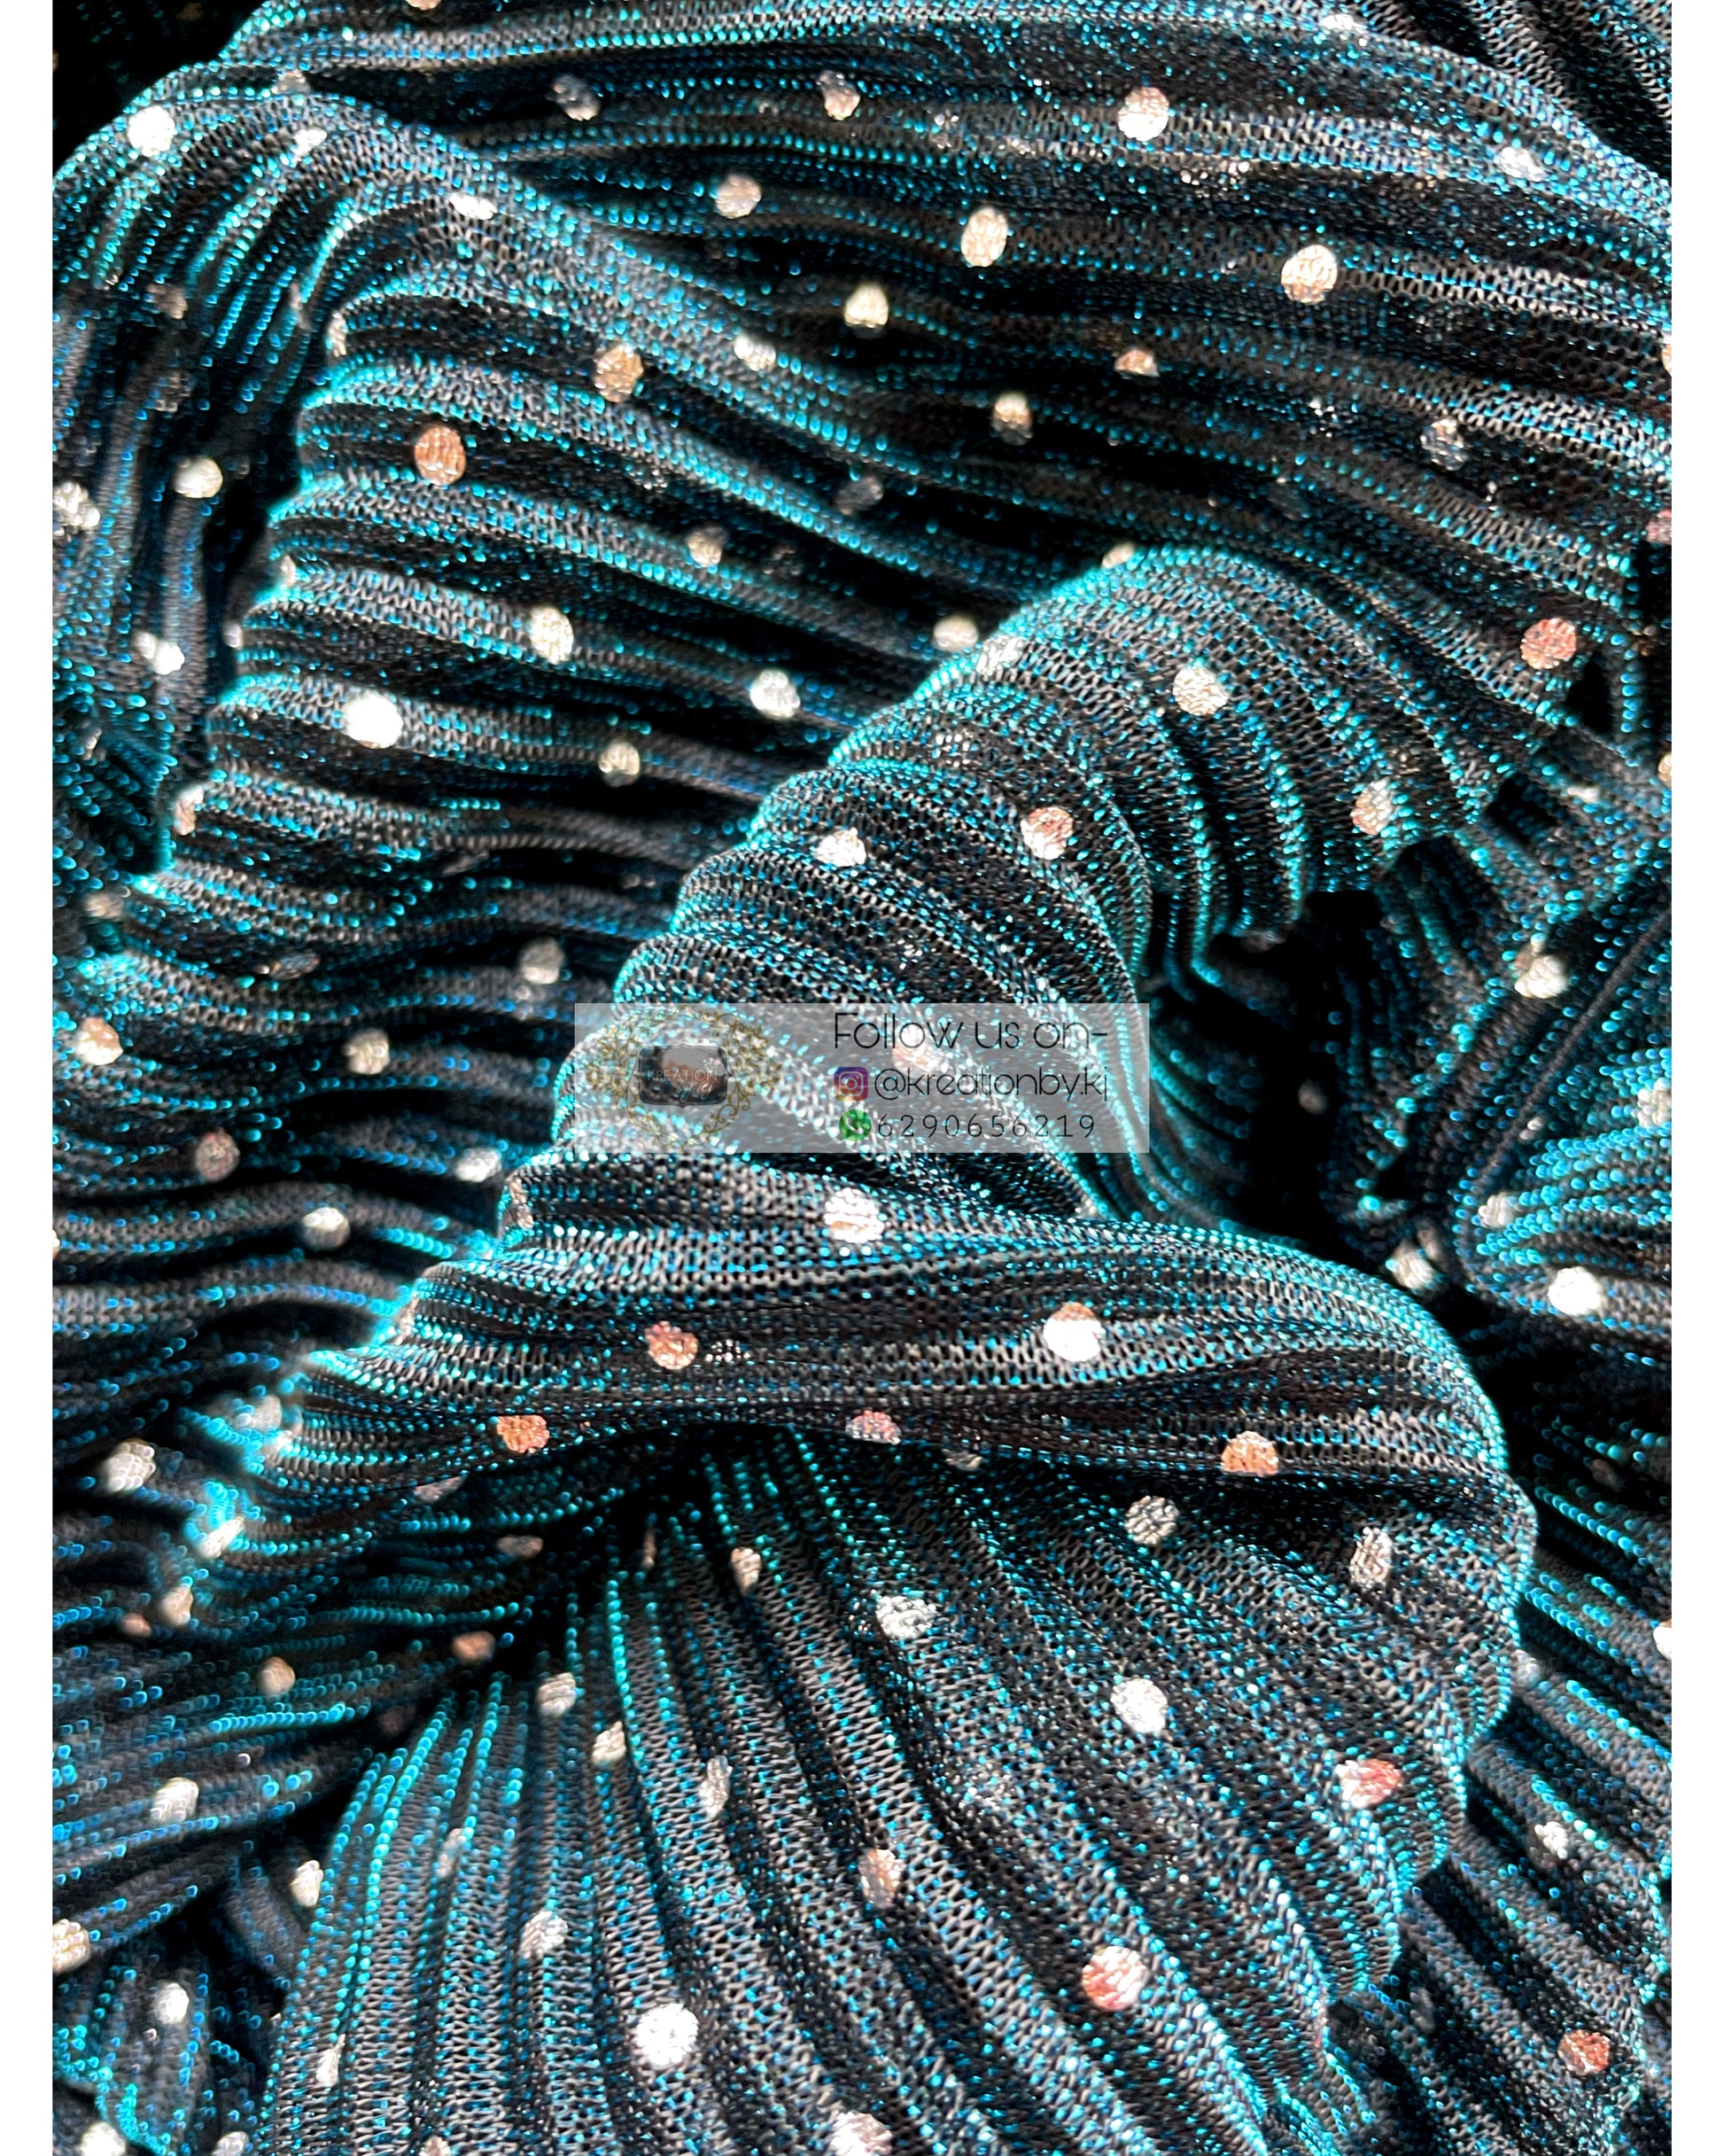 Blue Pleated Shimmer Net Saree - kreationbykj